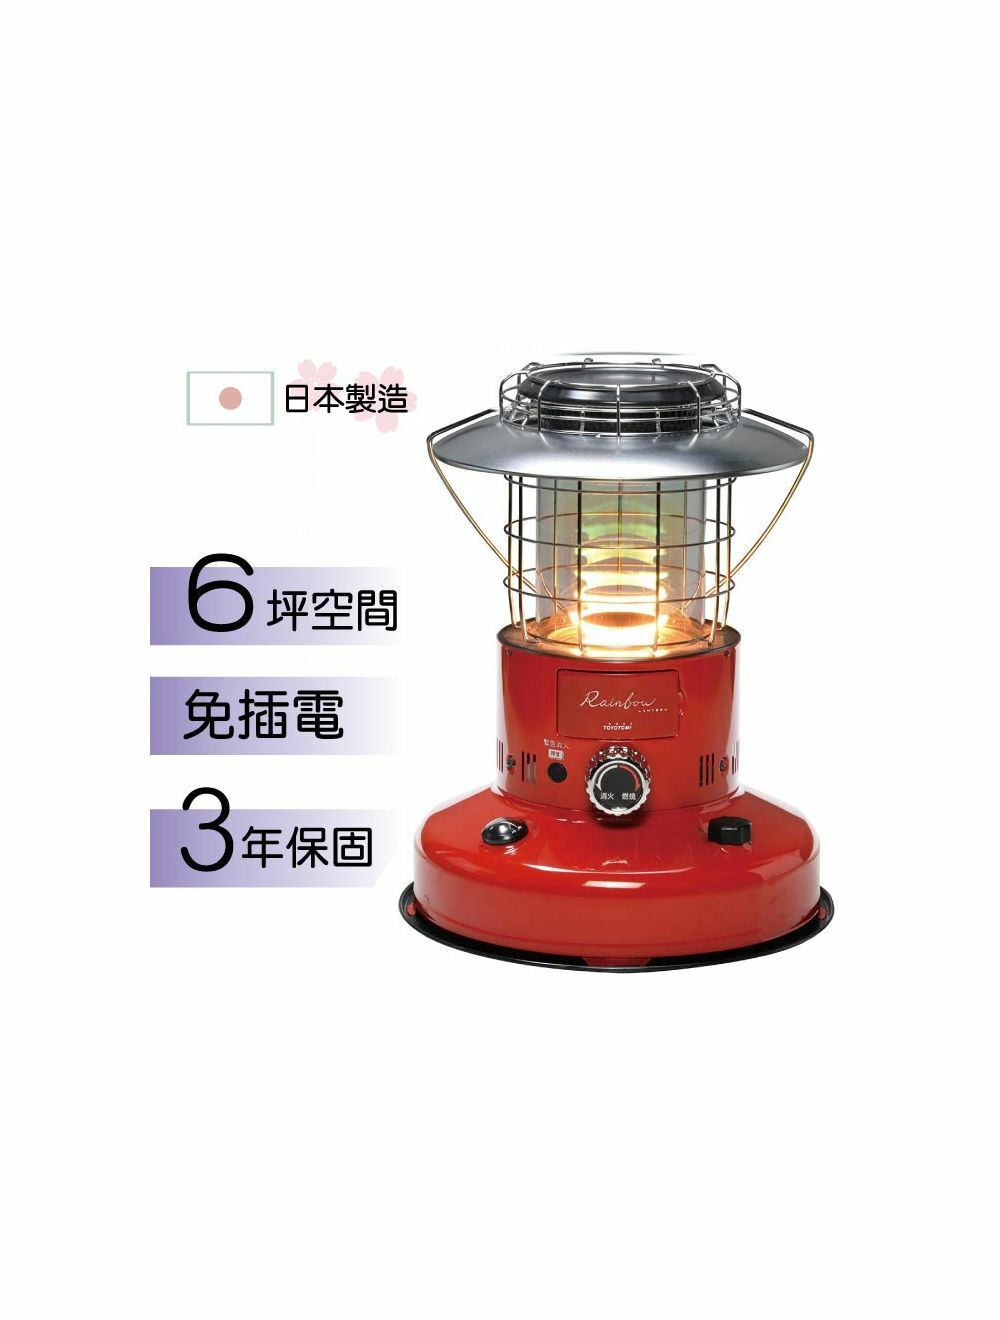 TOYOTOMI RL-250-R 煤油暖爐(紅色)